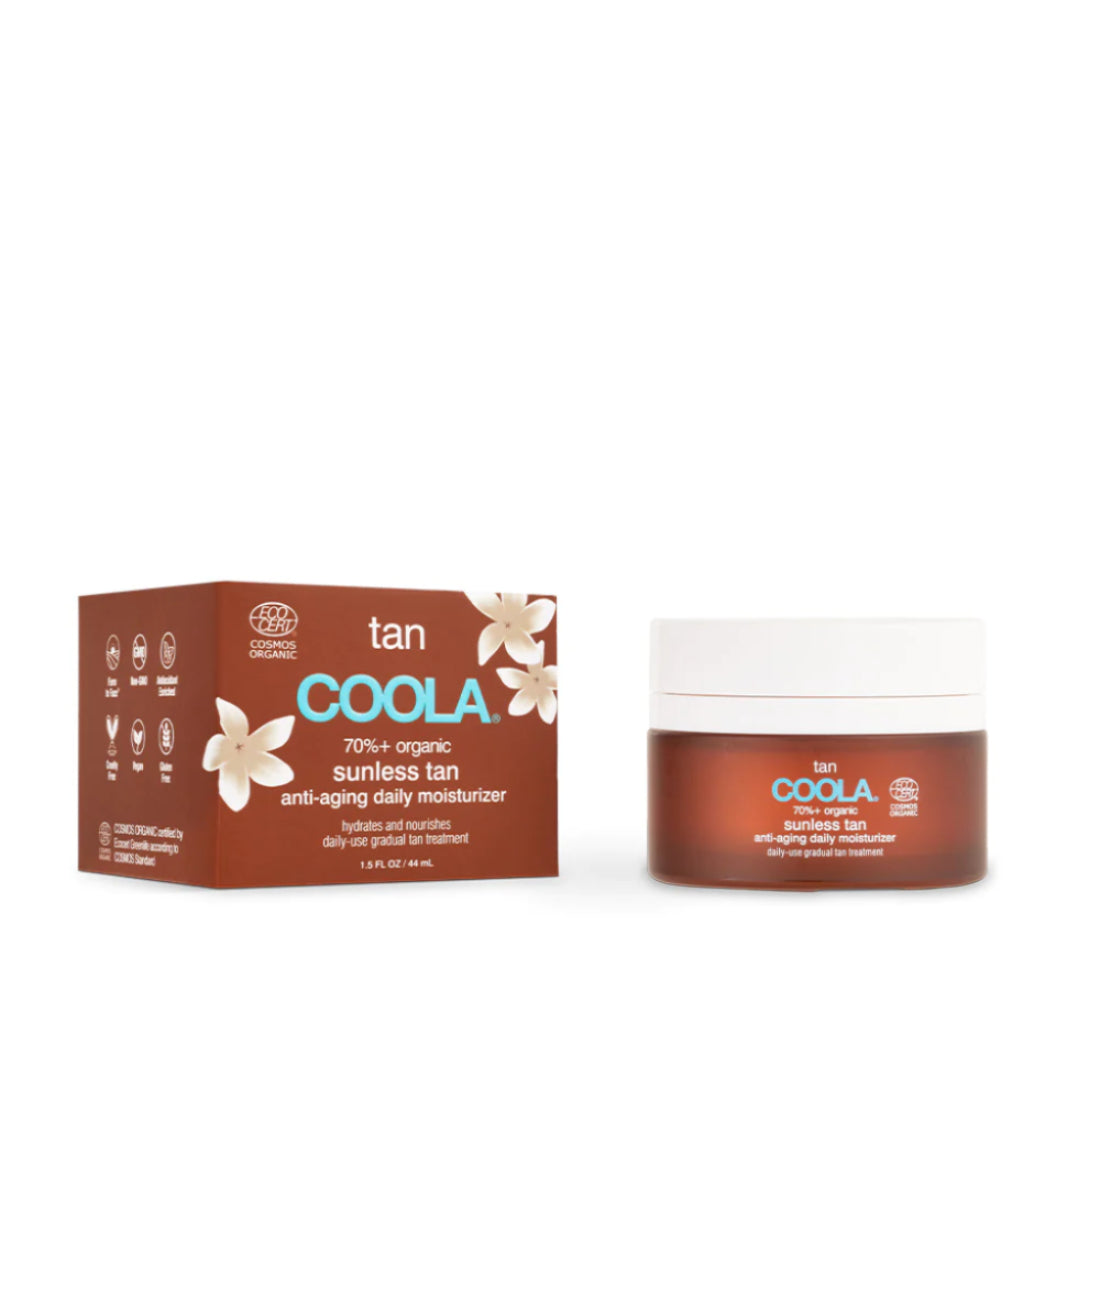 Coola Organic Sunless Tan Anti-Aging Daily Moisturizer